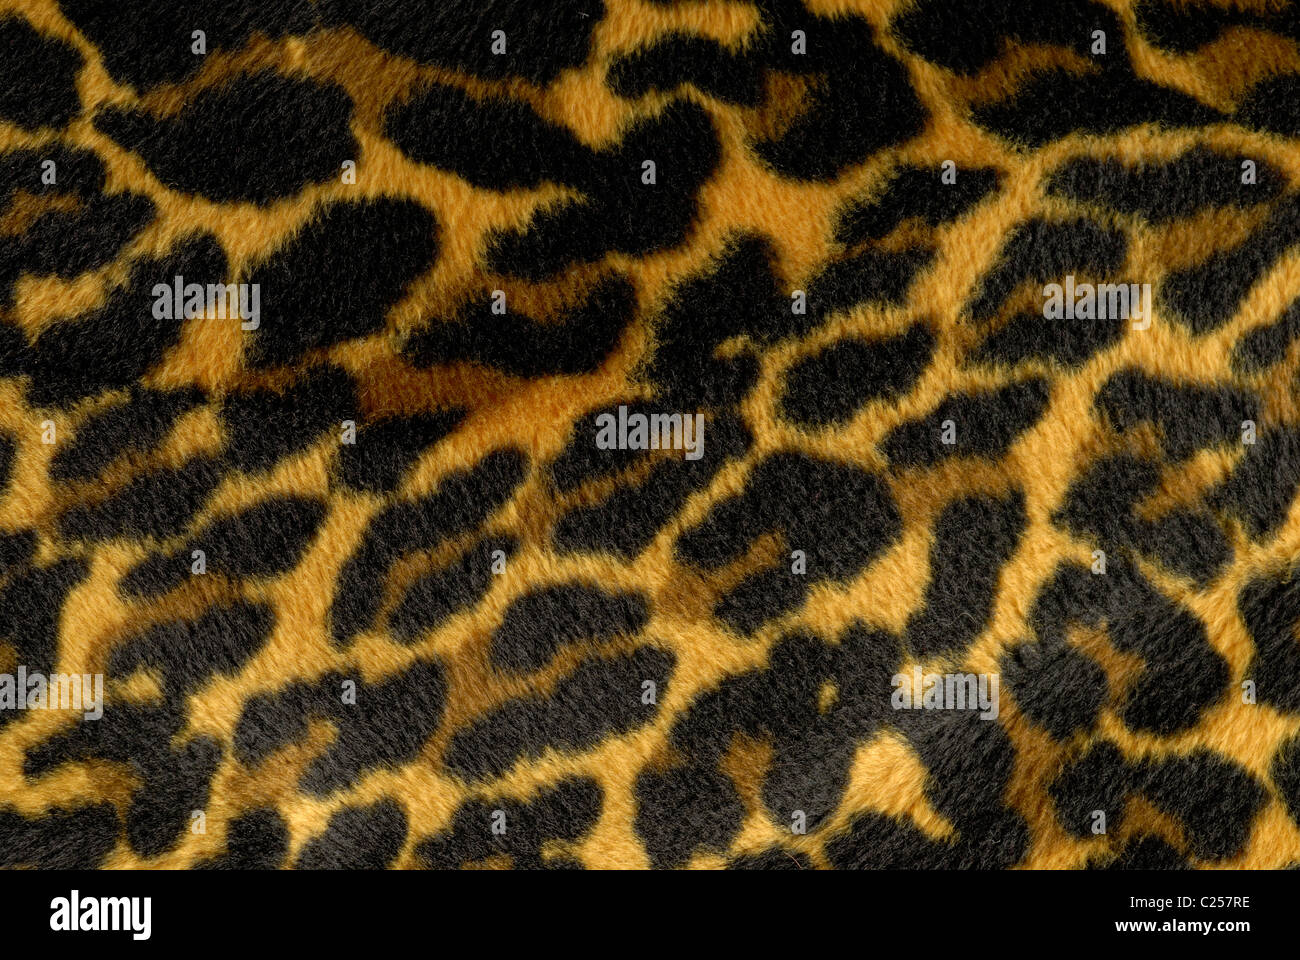 Yellow, brown and black cheetah print fabric. Stock Photo